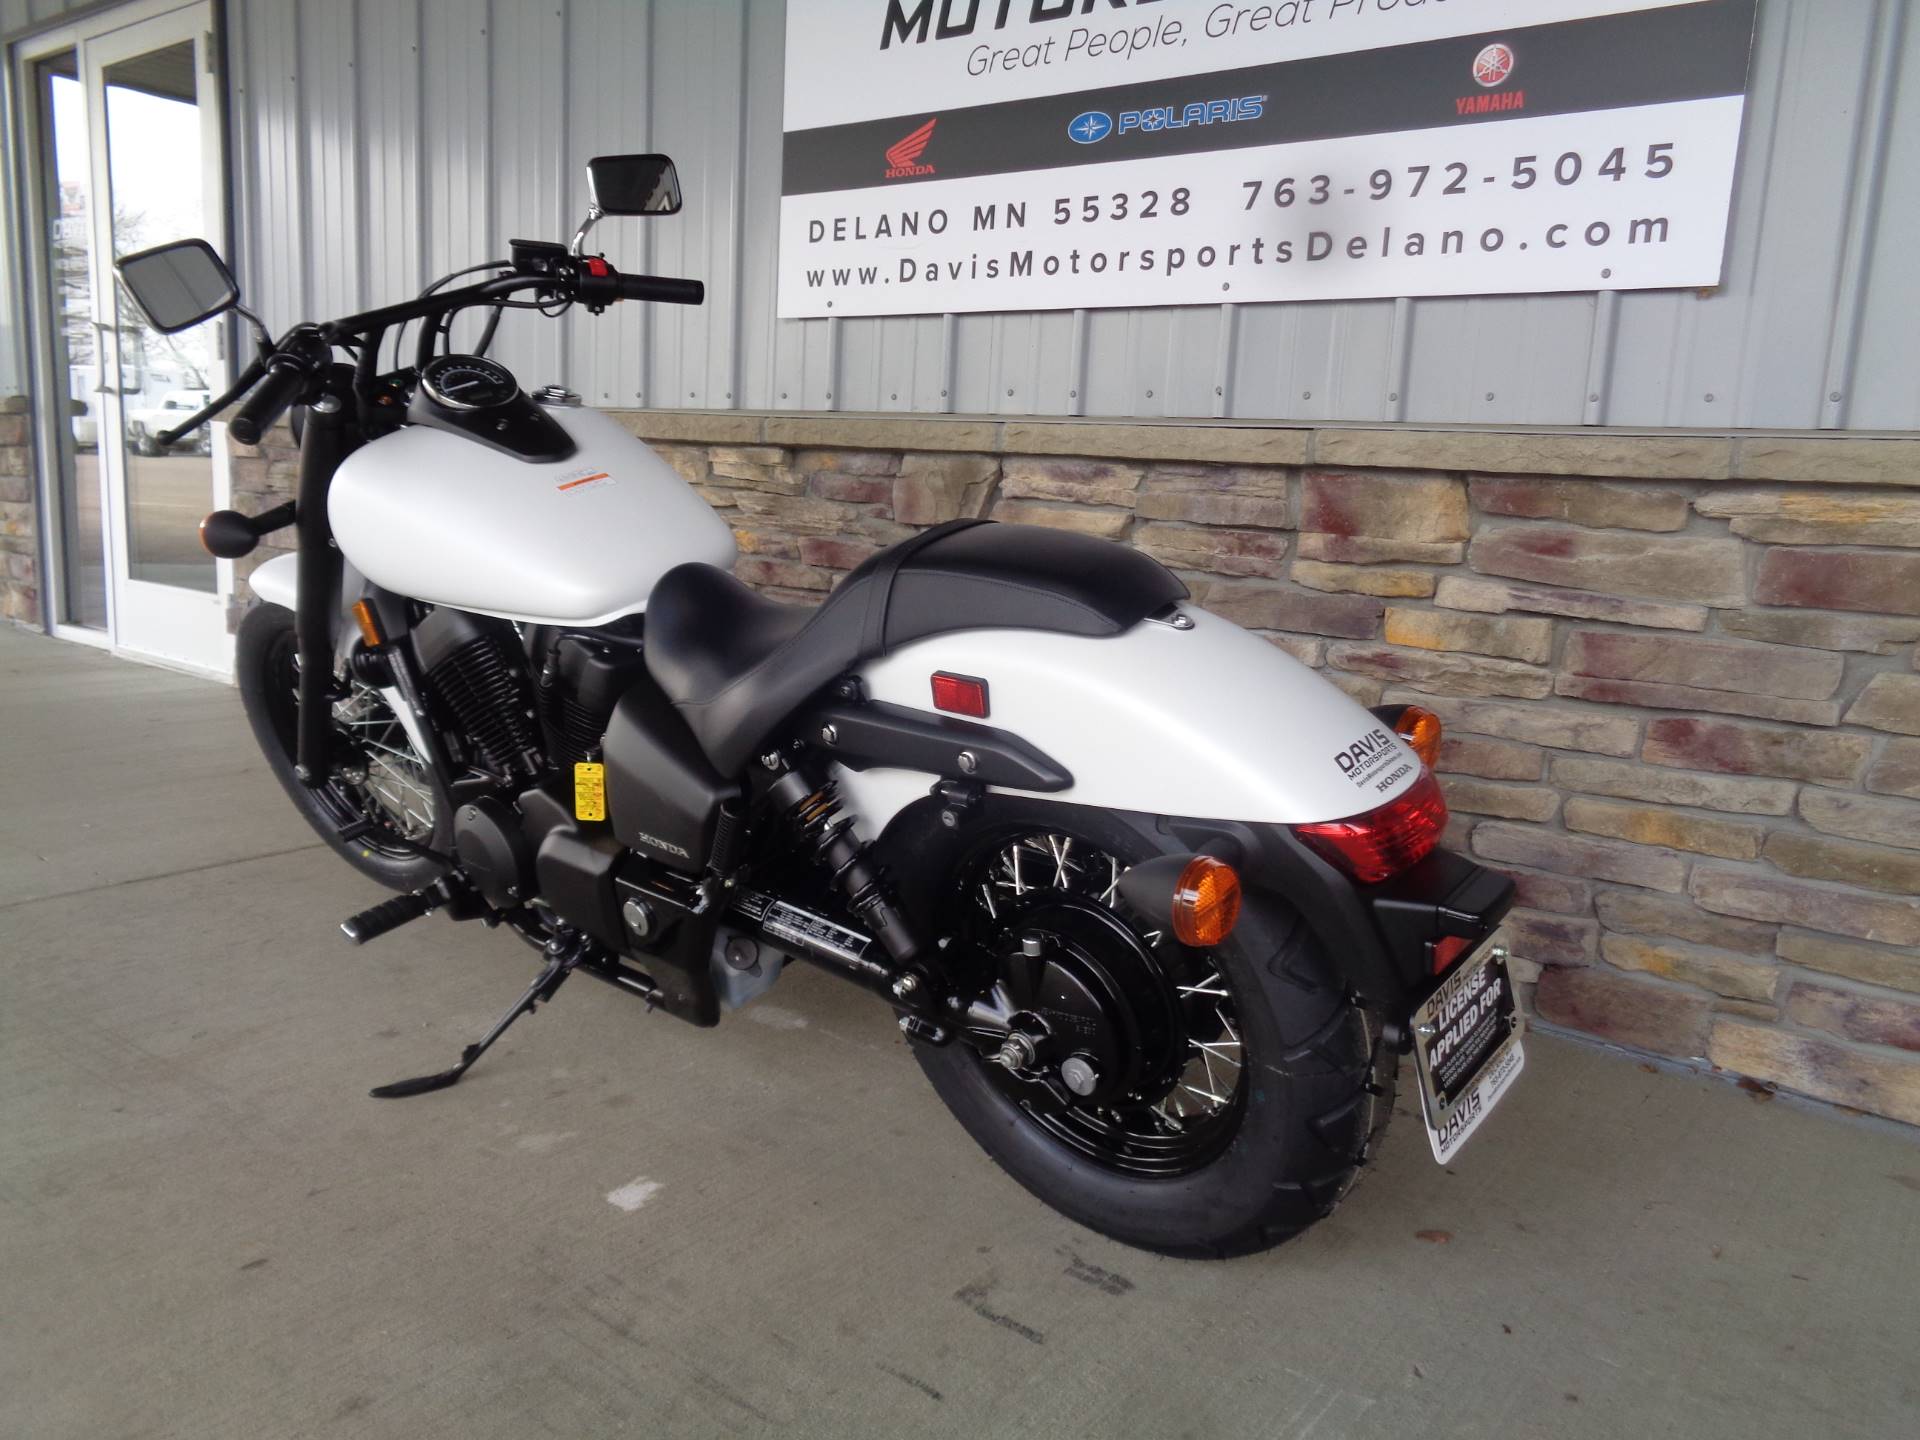 New 2020 Honda Shadow Phantom | Motorcycles in Delano MN ...